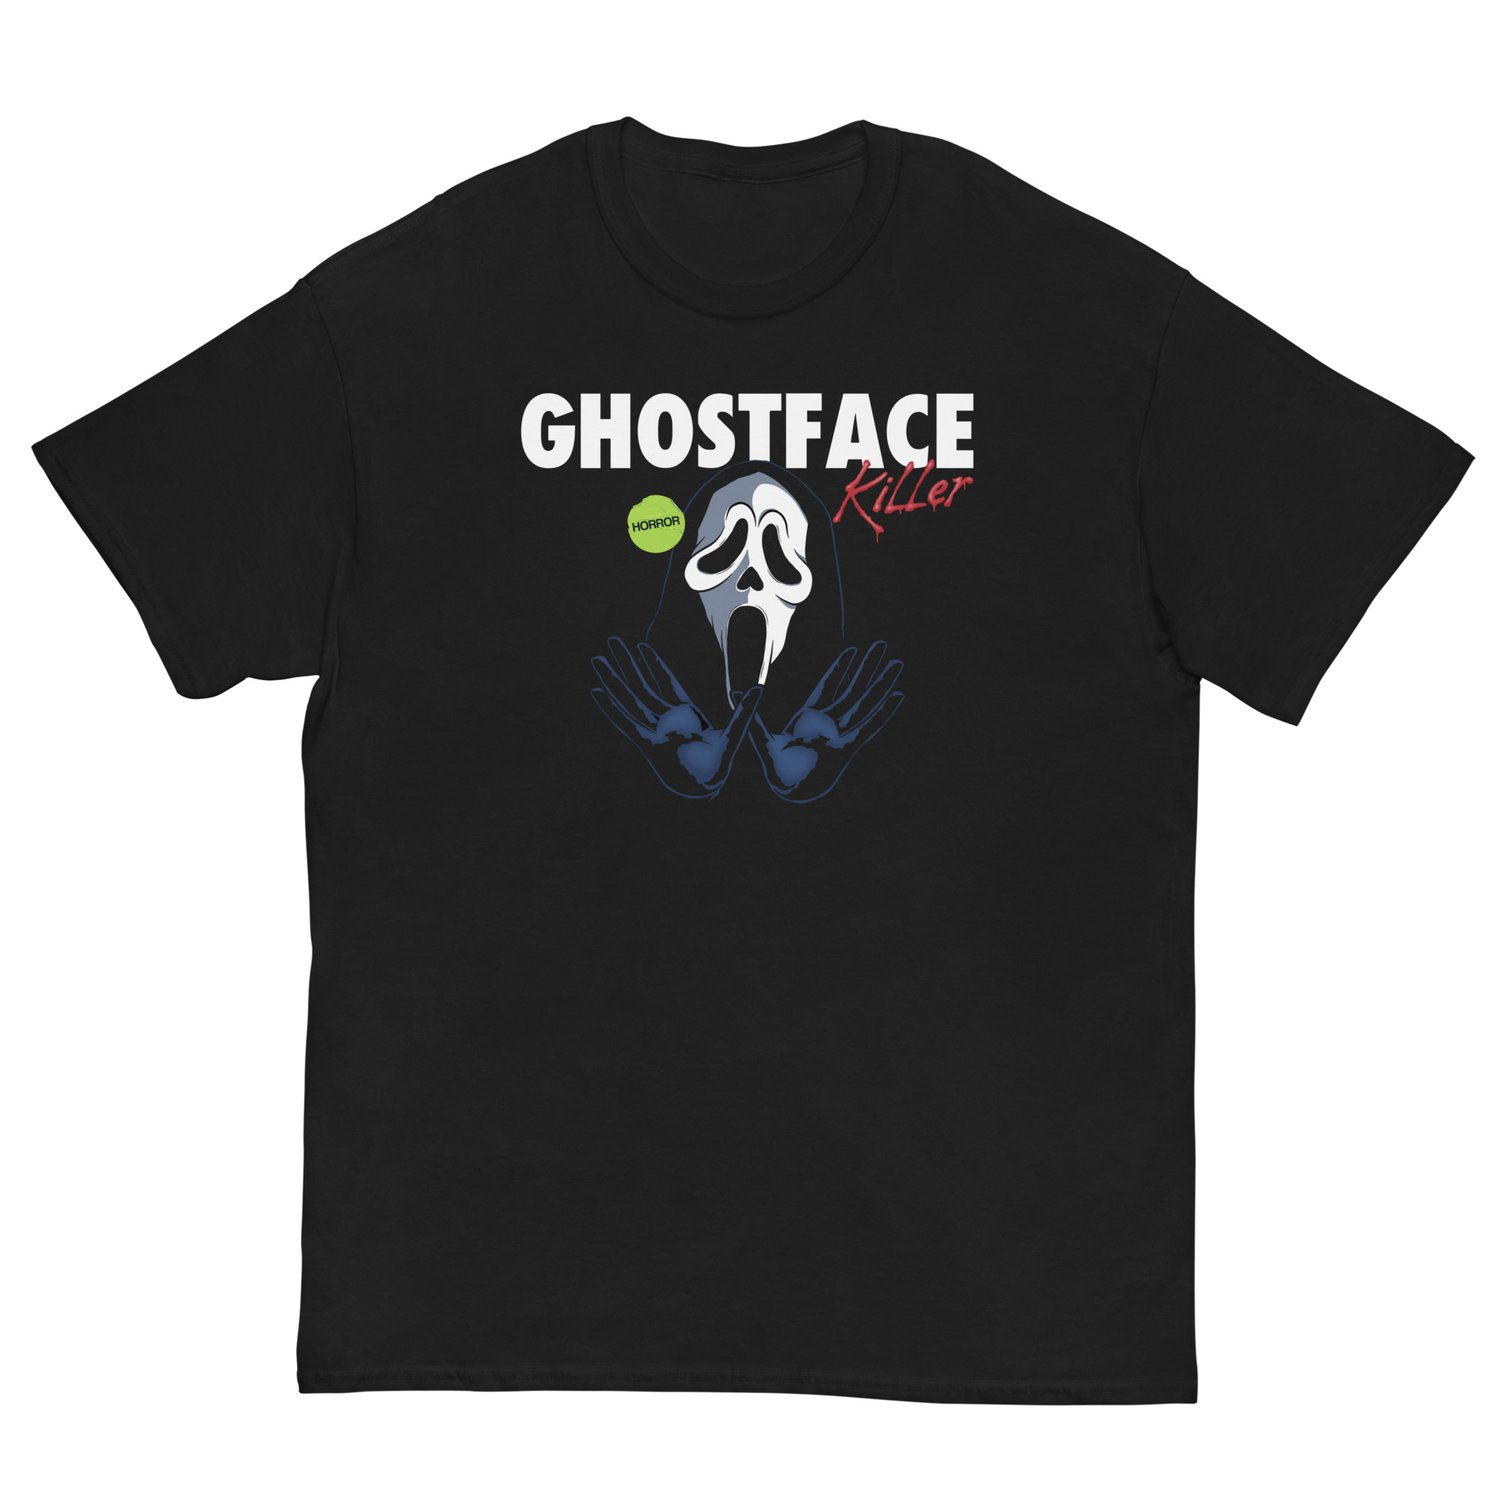 Image of Ghostface Killer tee